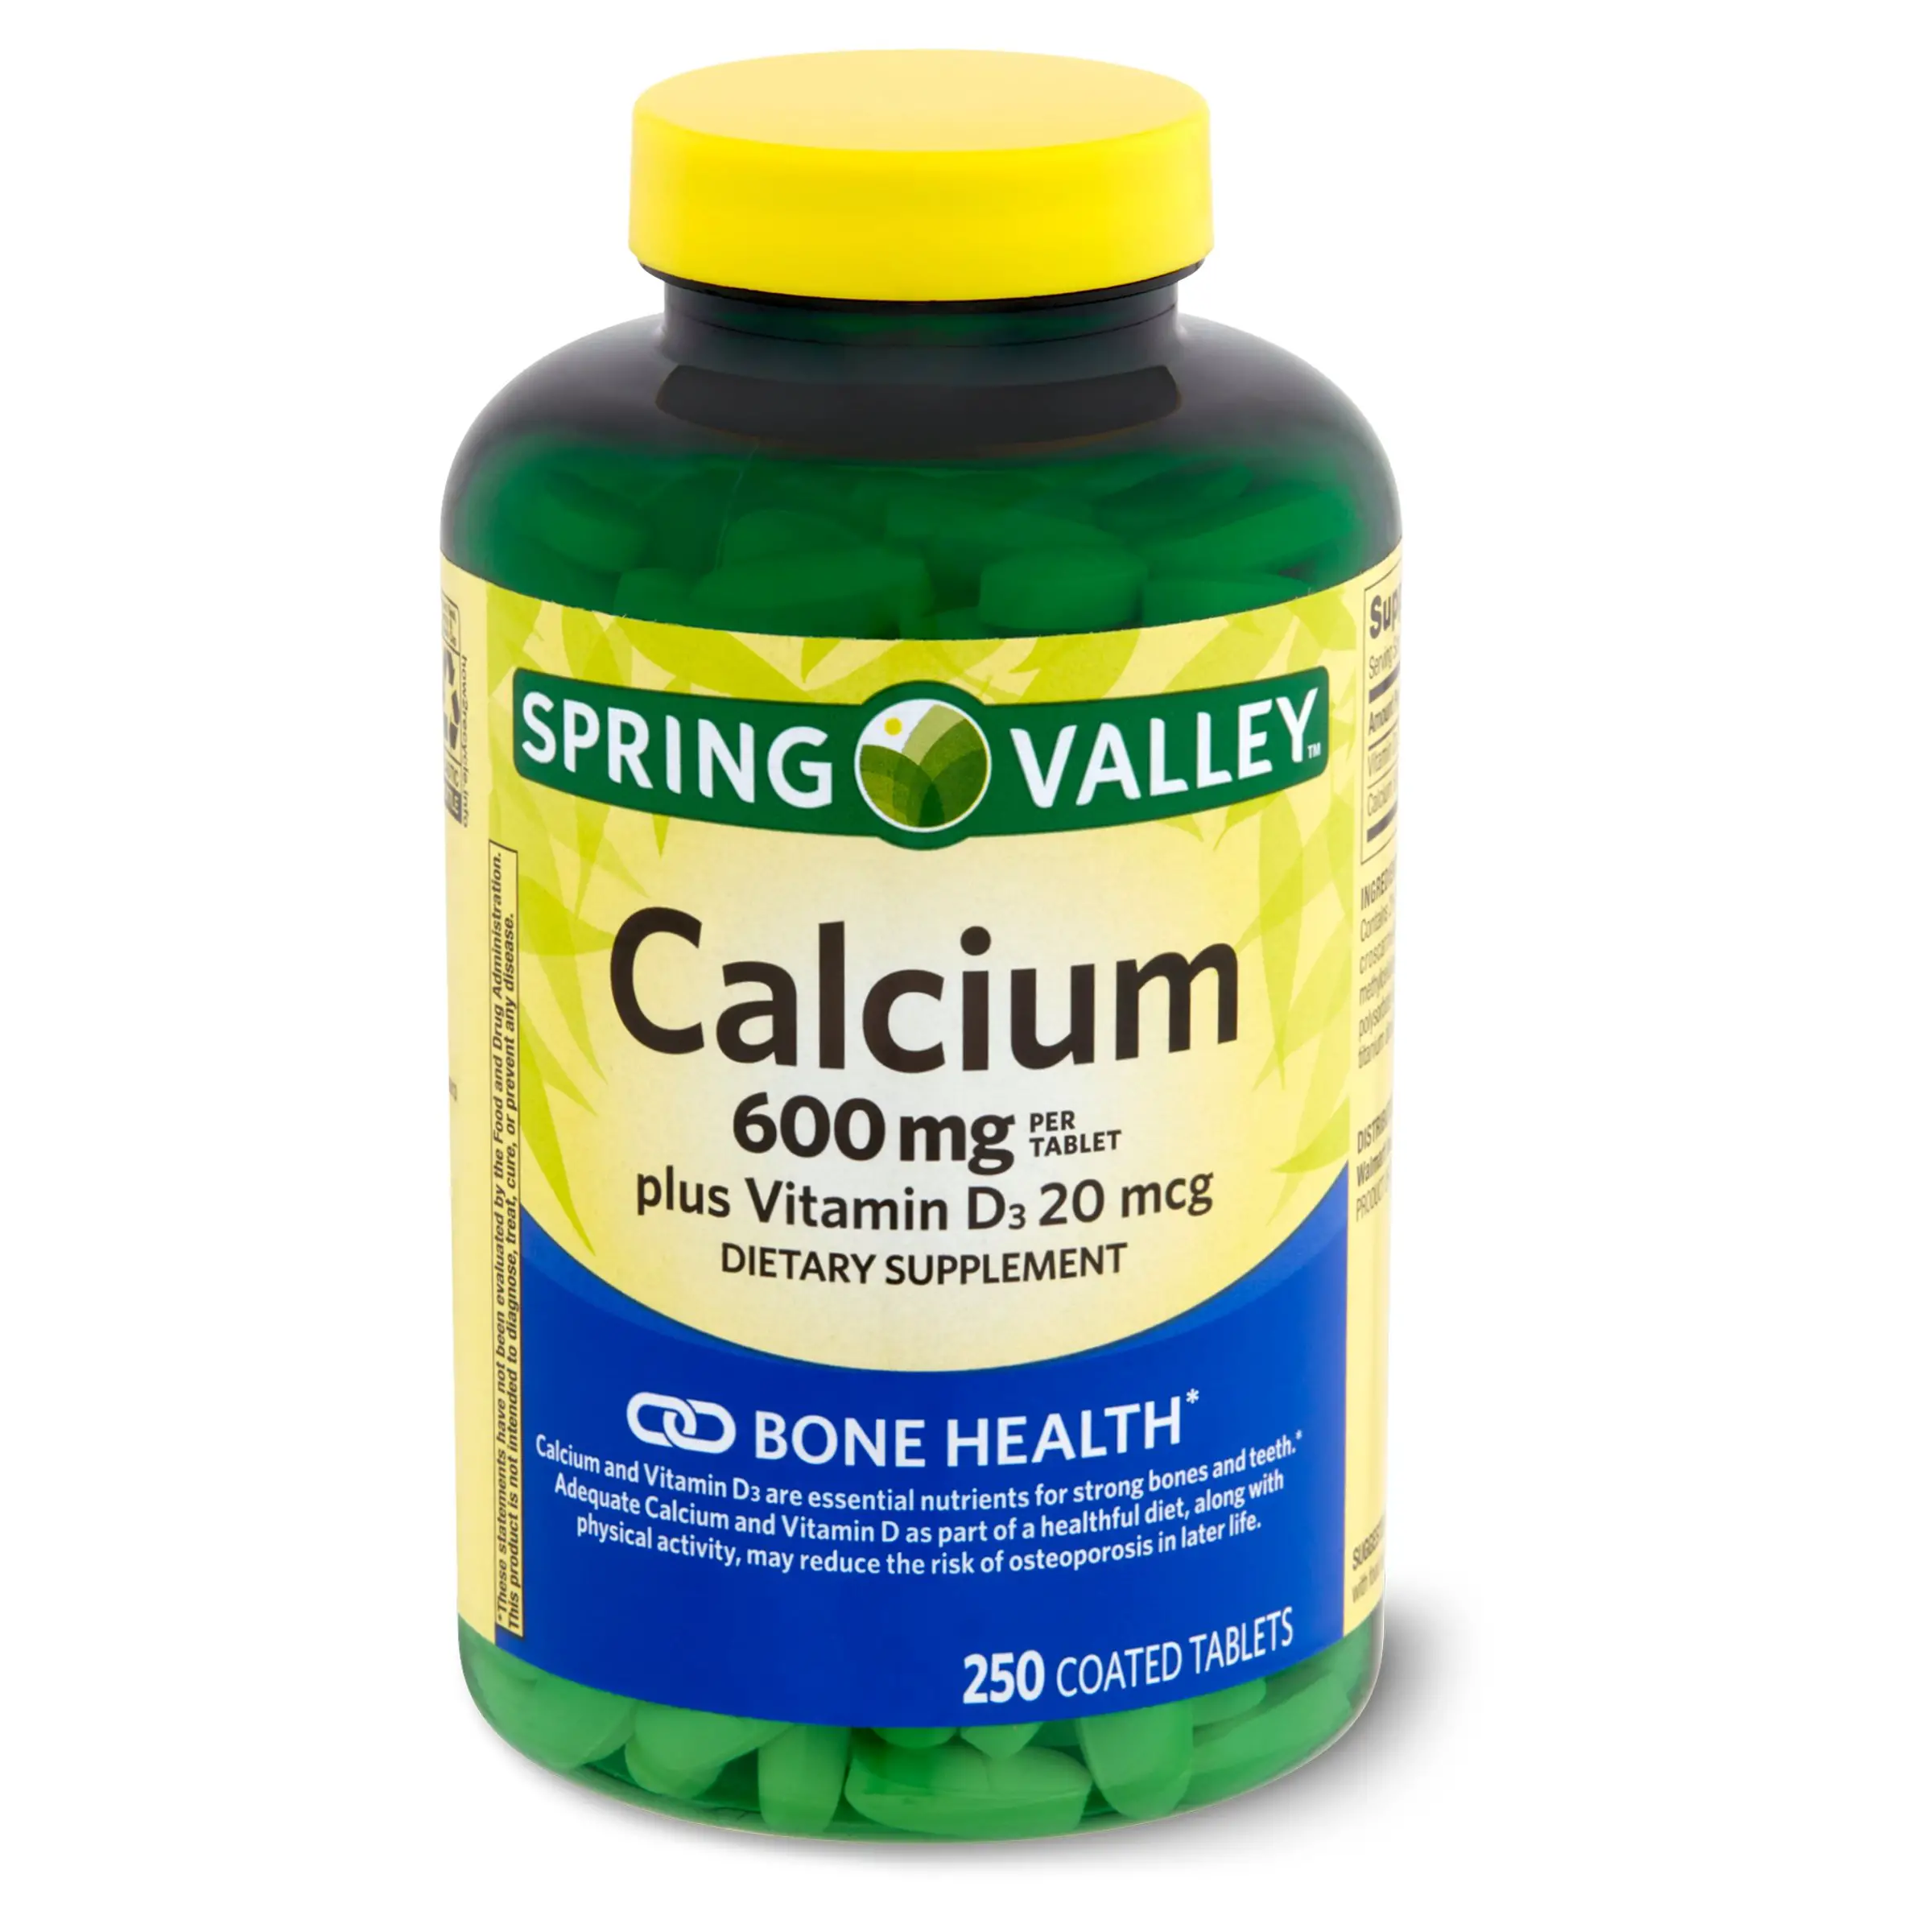 Spring Valley Calcium Plus Vitamin D3 20 mcg Dietary Supplement, 600 mg ...